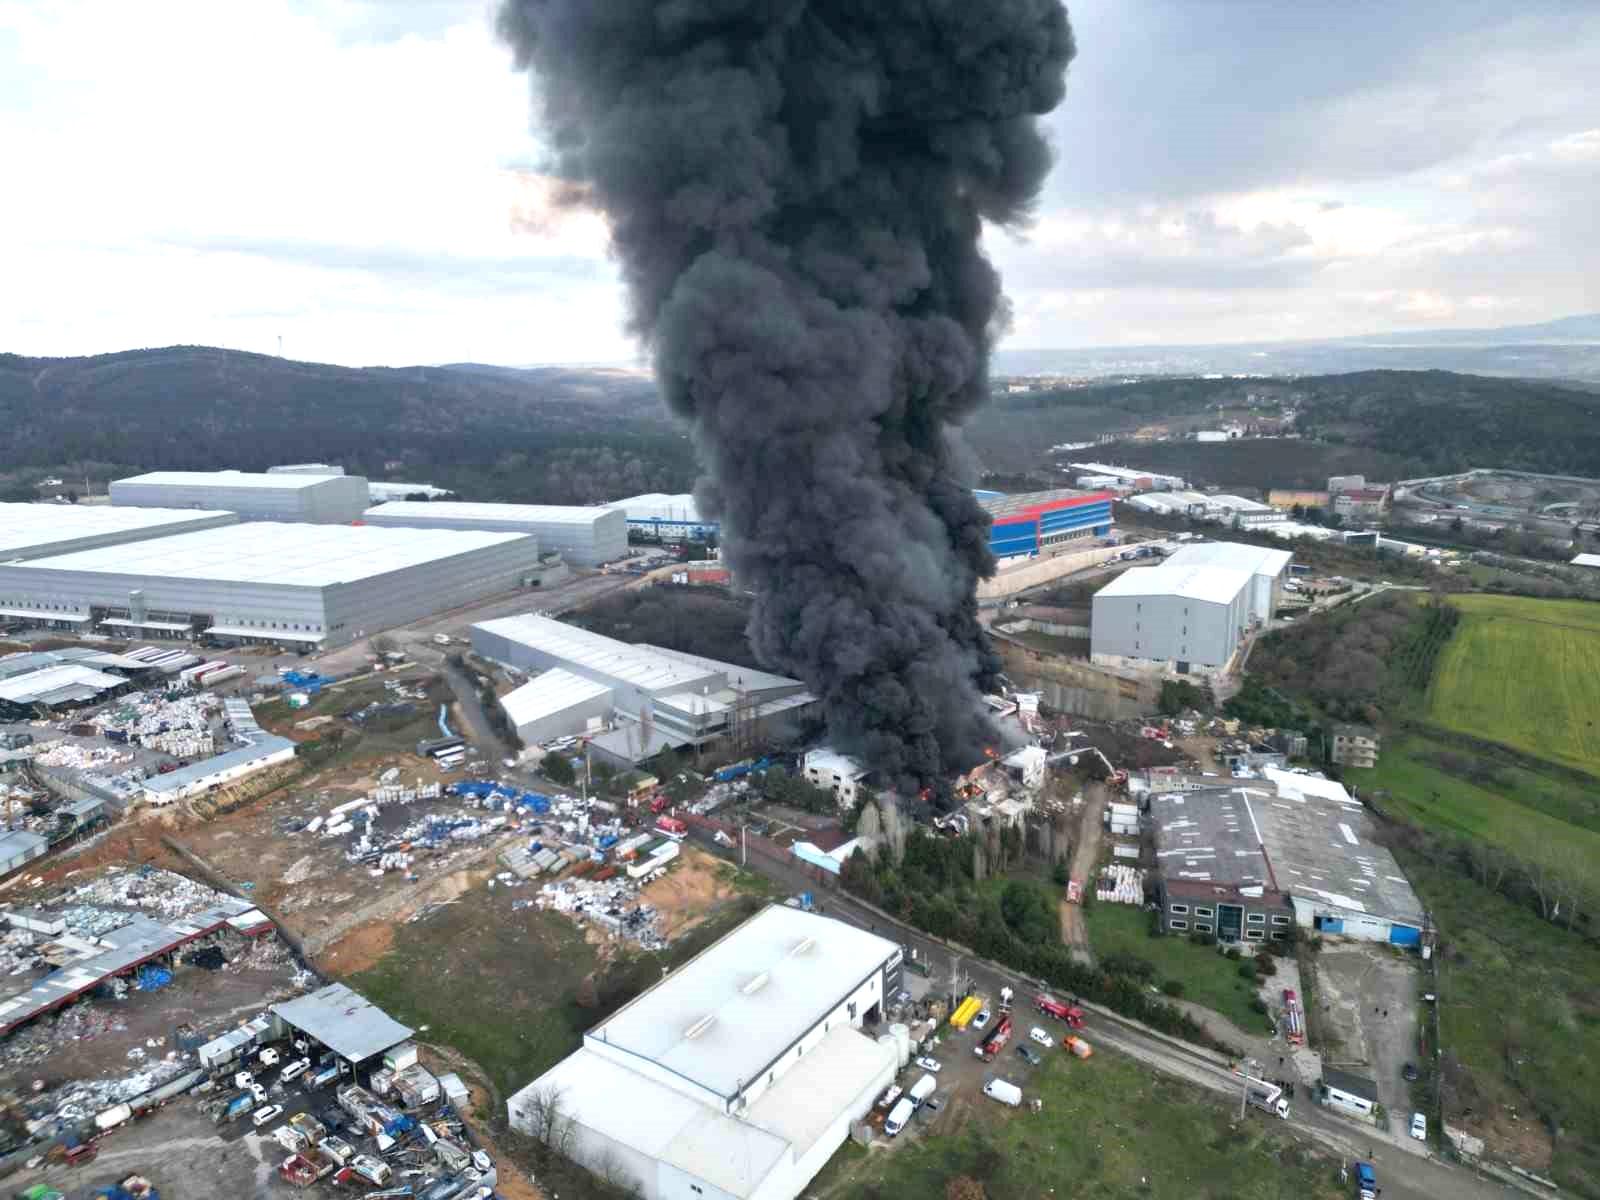 Alev alev yanan fabrika havadan görüntülendi